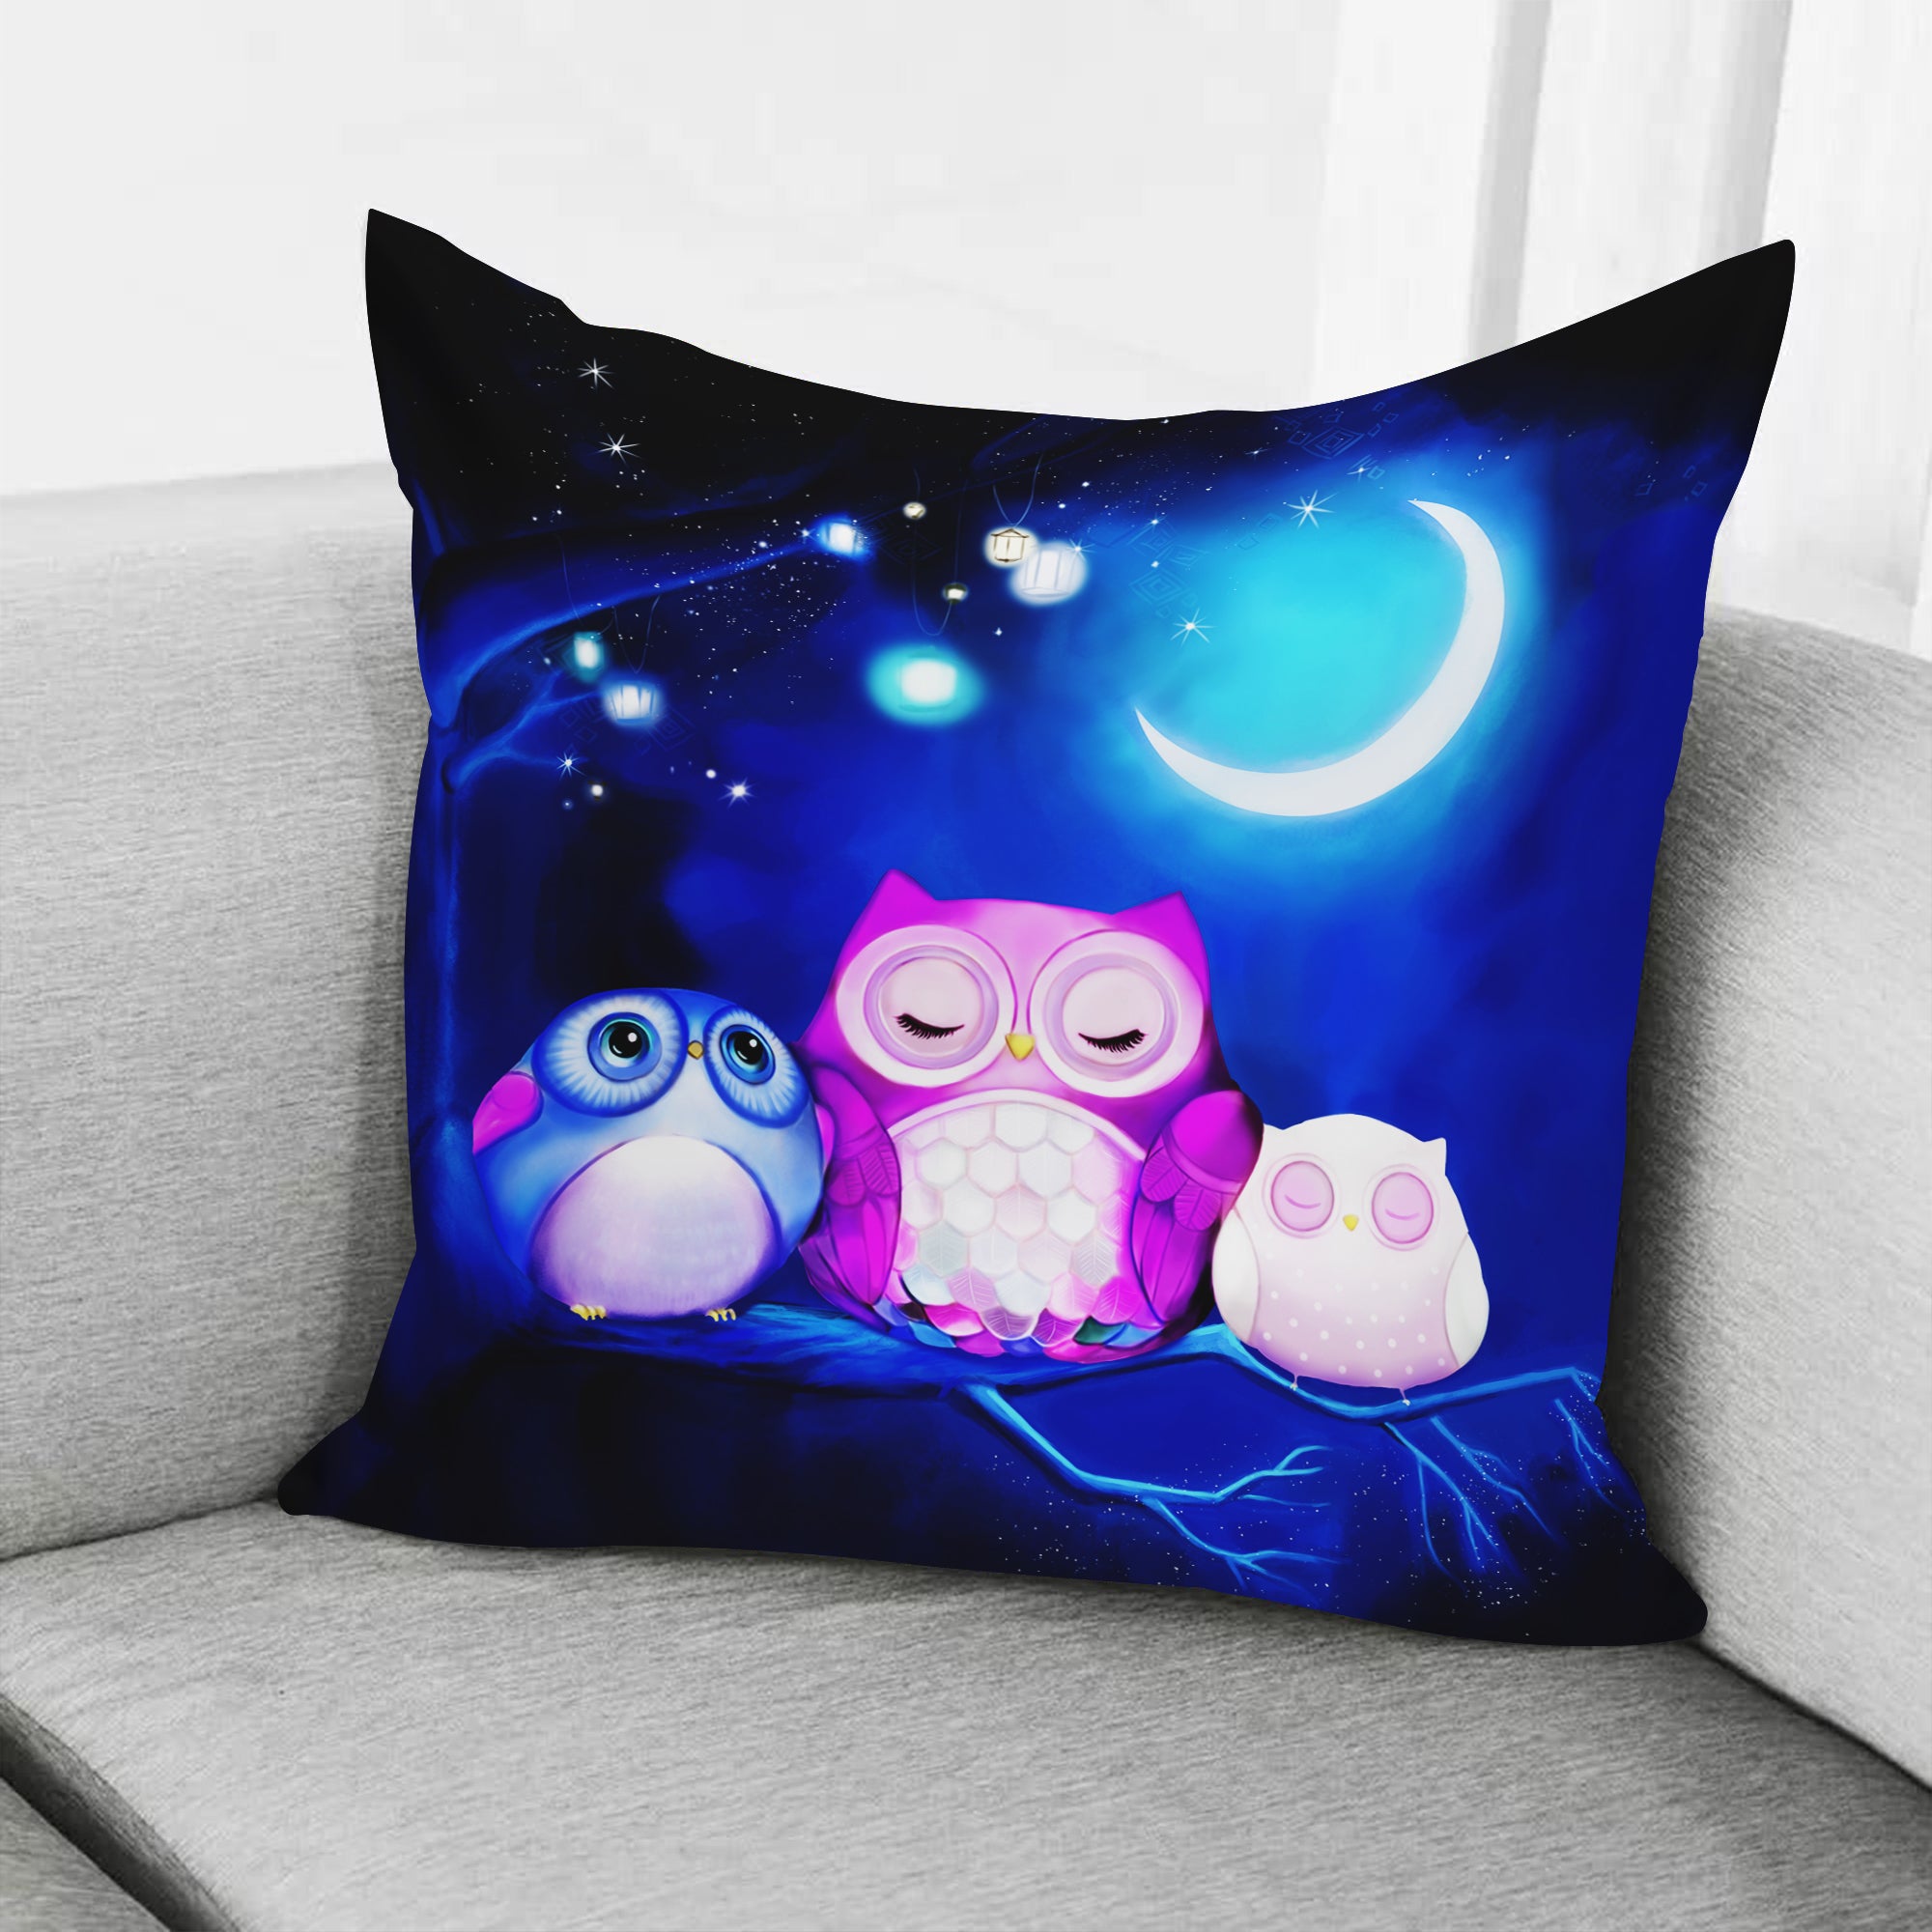 Cute Owl Family Night Pillowcase Room Decor